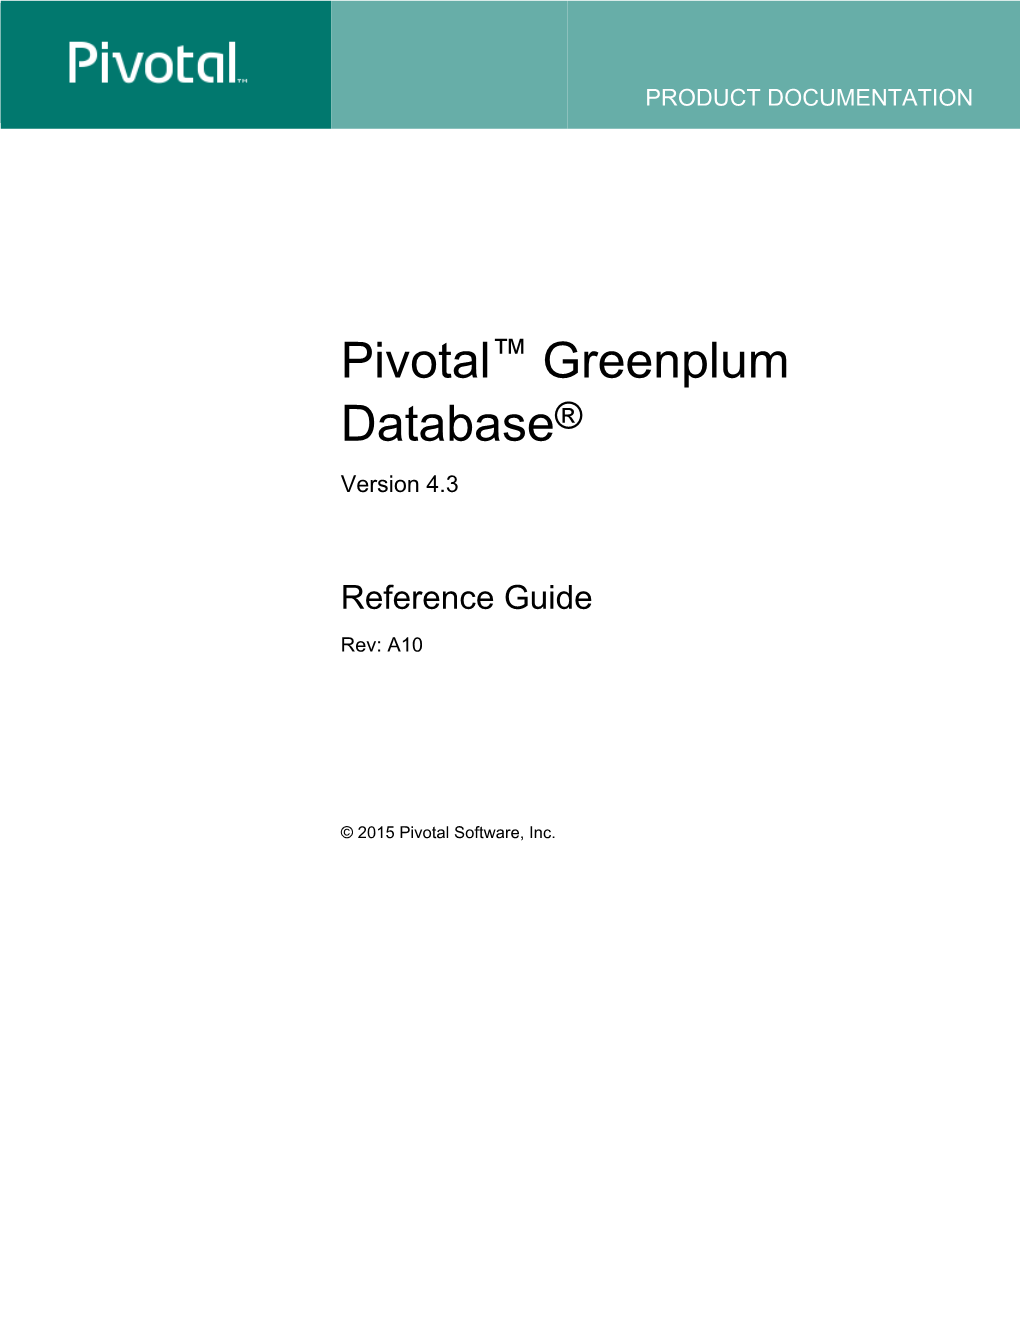 Pivotal™ Greenplum Database® Version 4.3